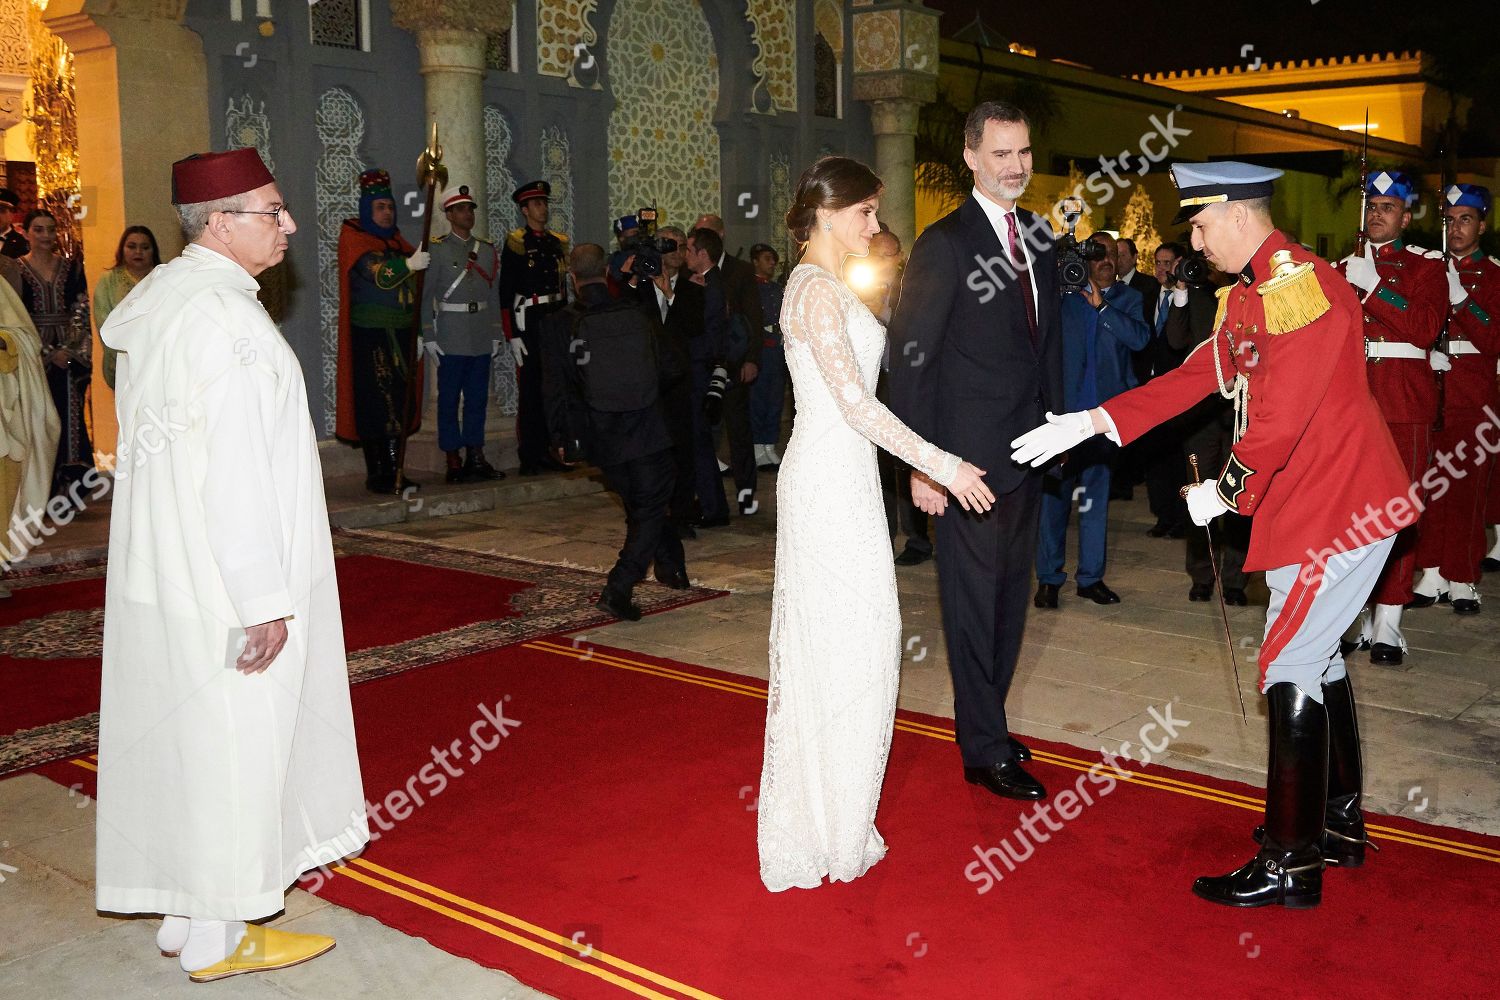 spanish-royals-visit-morocco-rabat-morocco-shutterstock-editorial-10104332e.jpg